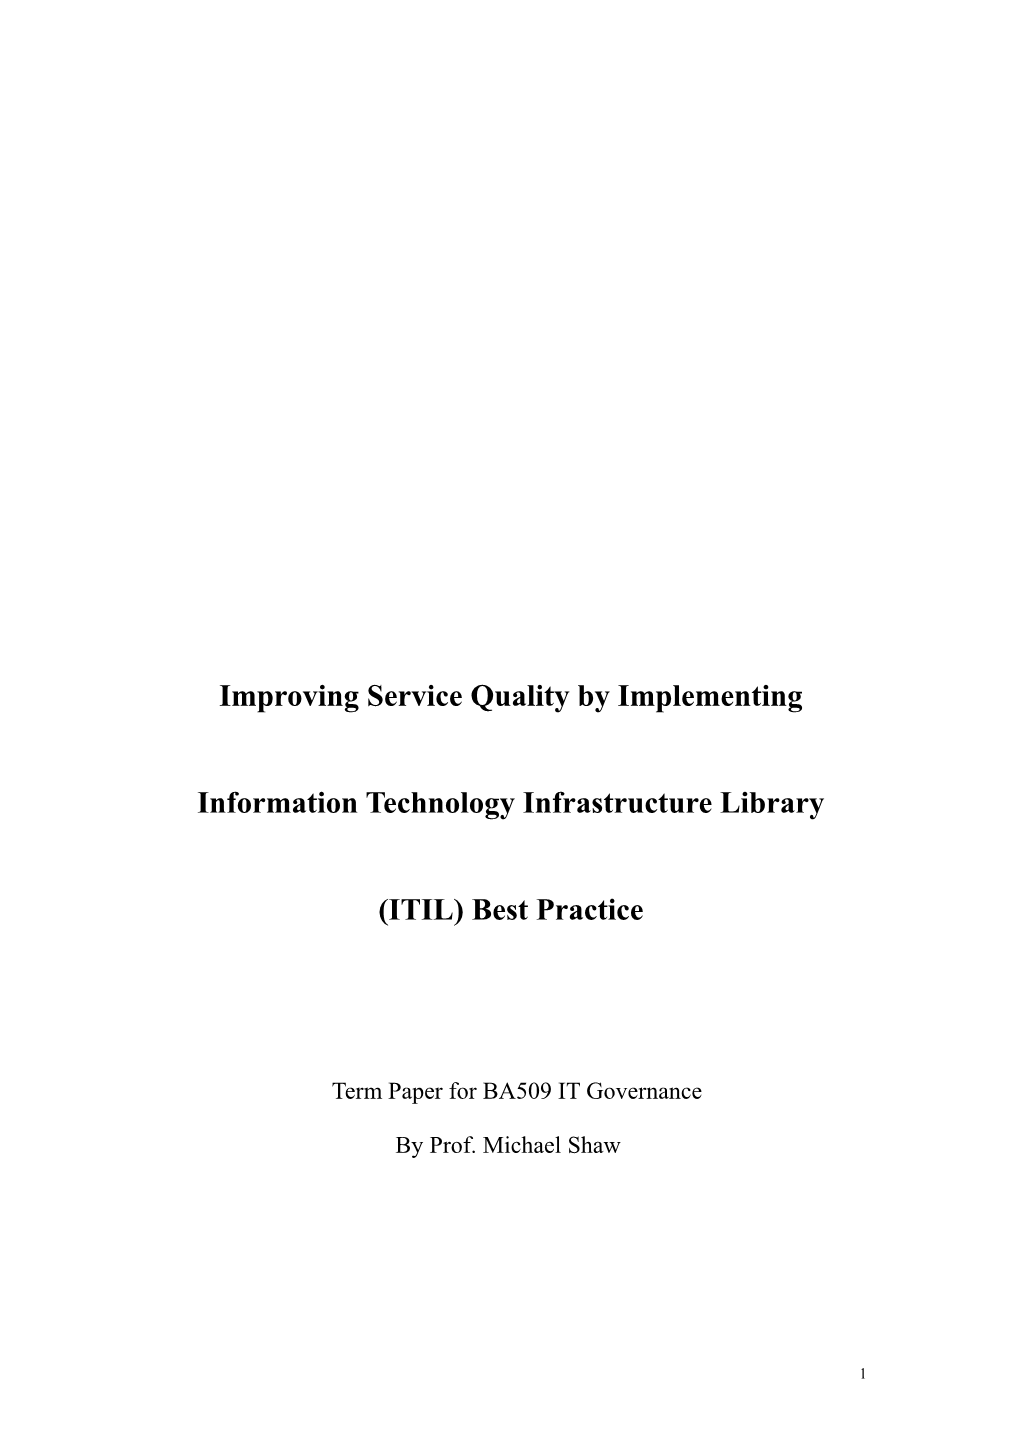 Using IT Governance Frameworks to Improve Service Quality